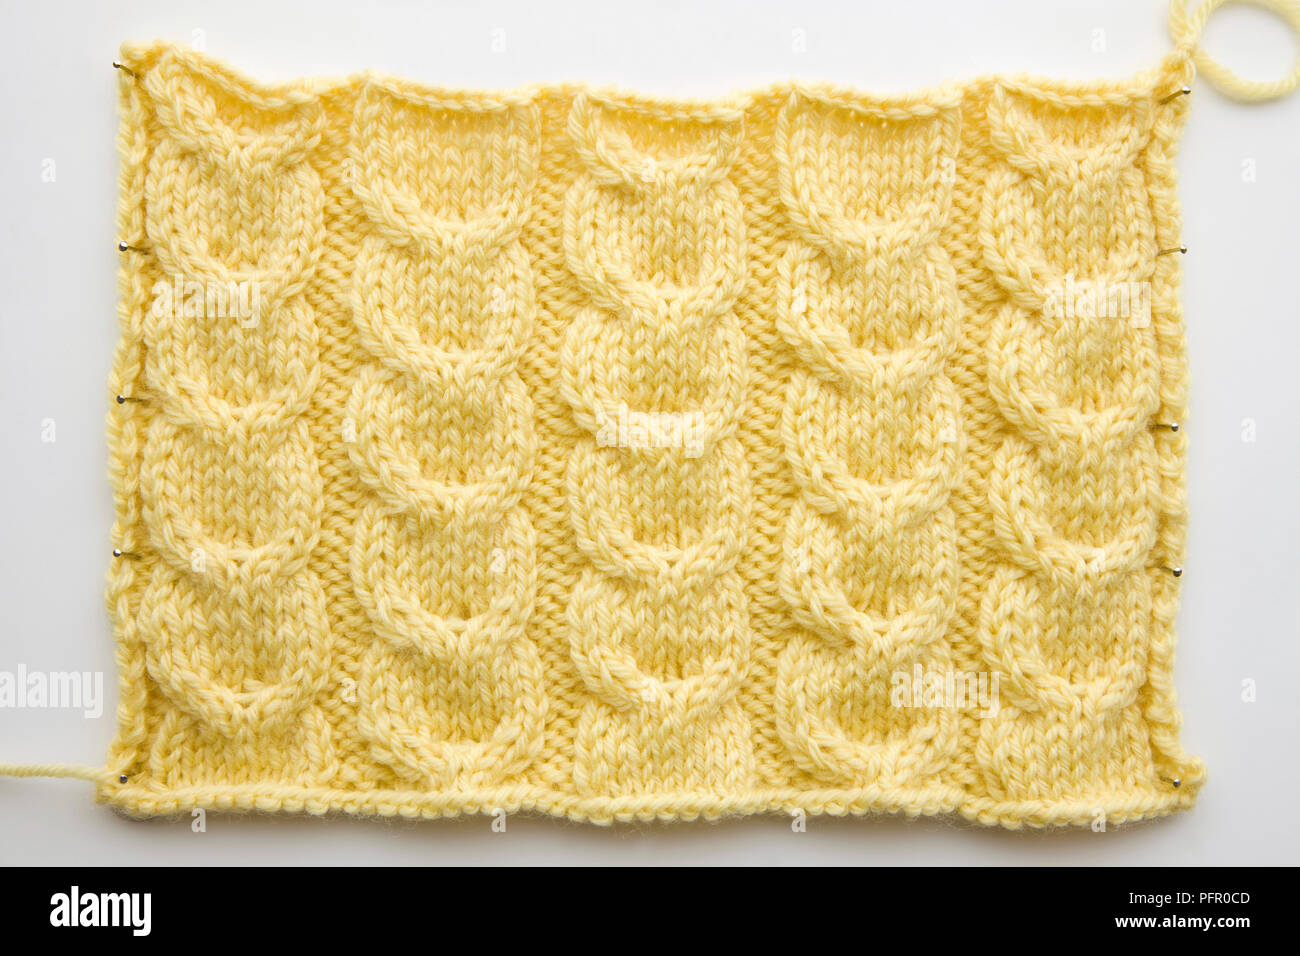 Piece of yellow knitting, showing horseshoe cable stitch Stock Photo